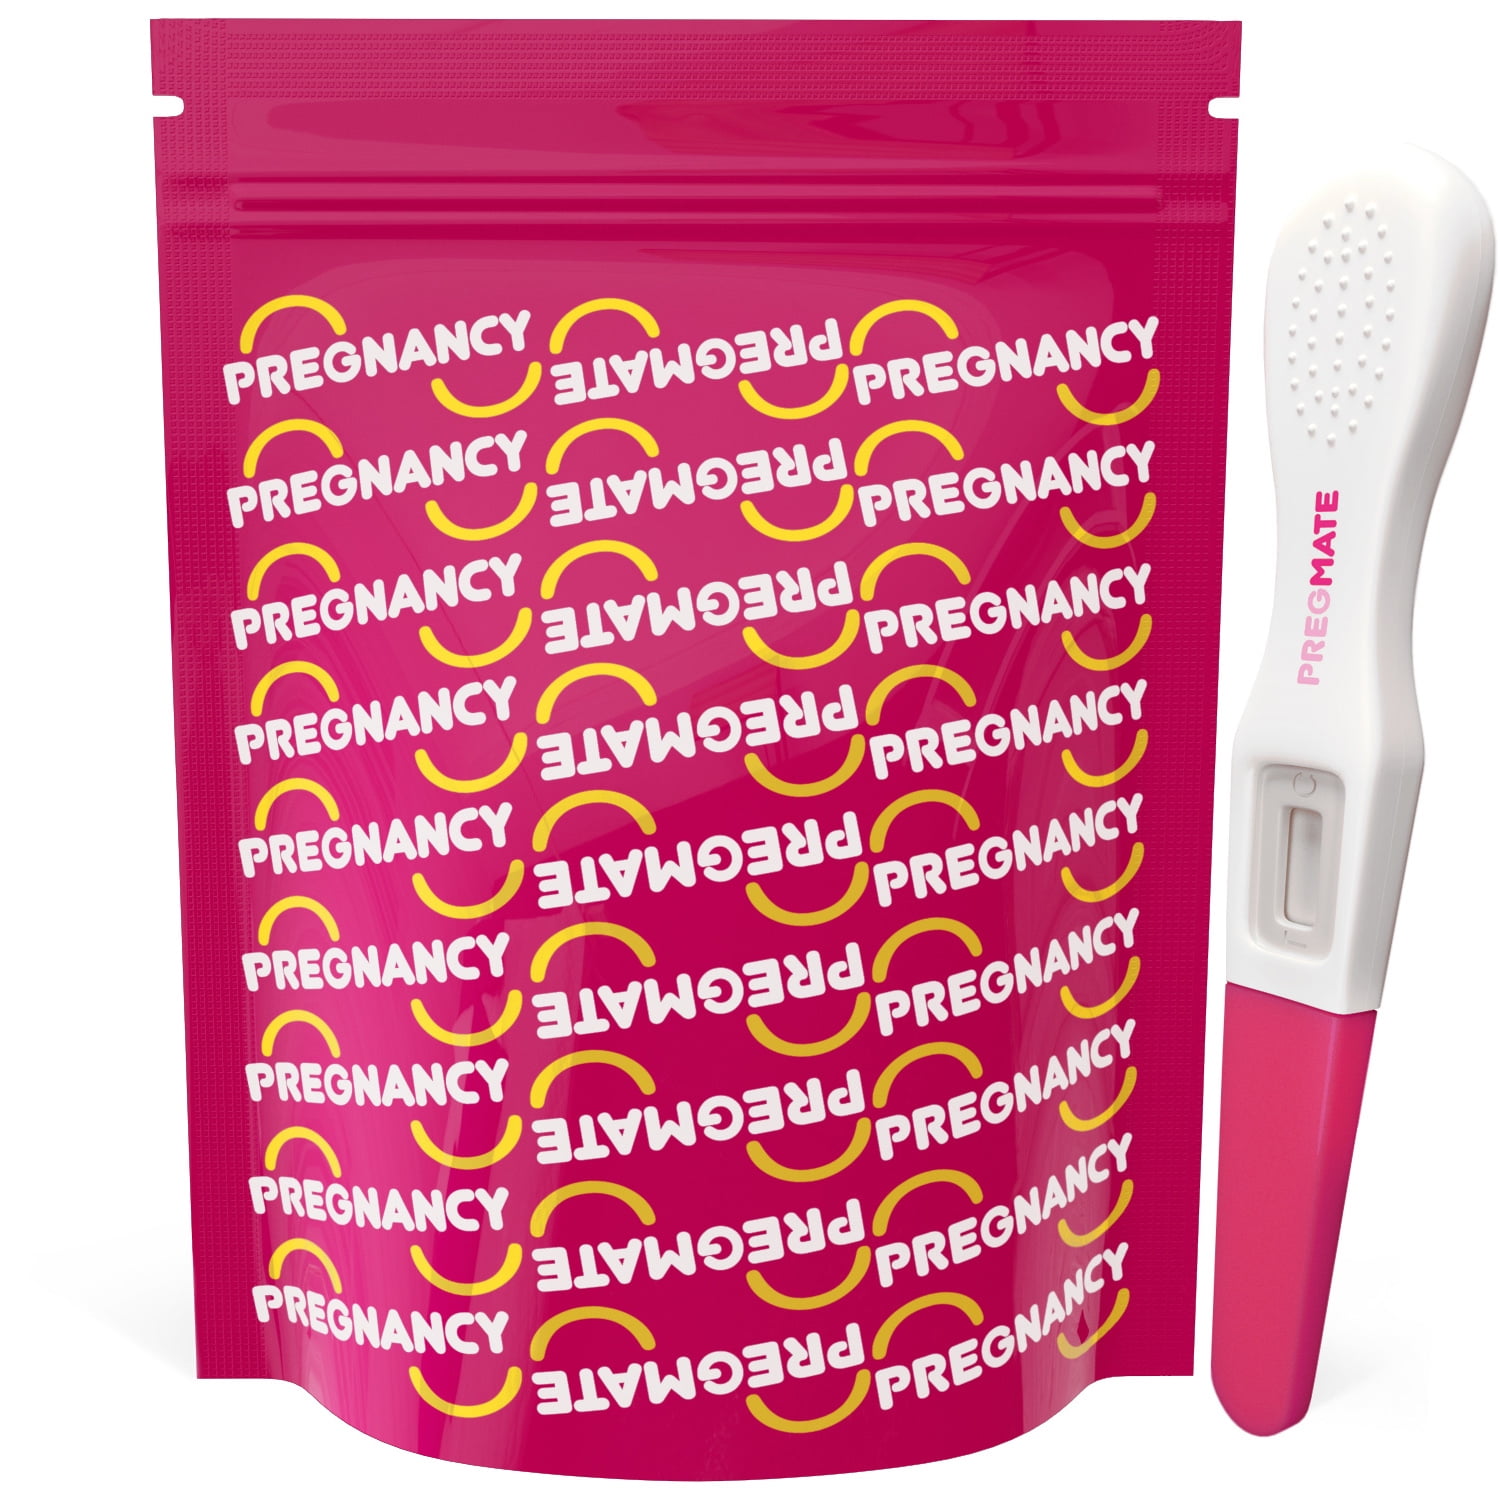 Uenvision Clear Response Fake Pregnancy Test Positive Practical Joke Prank